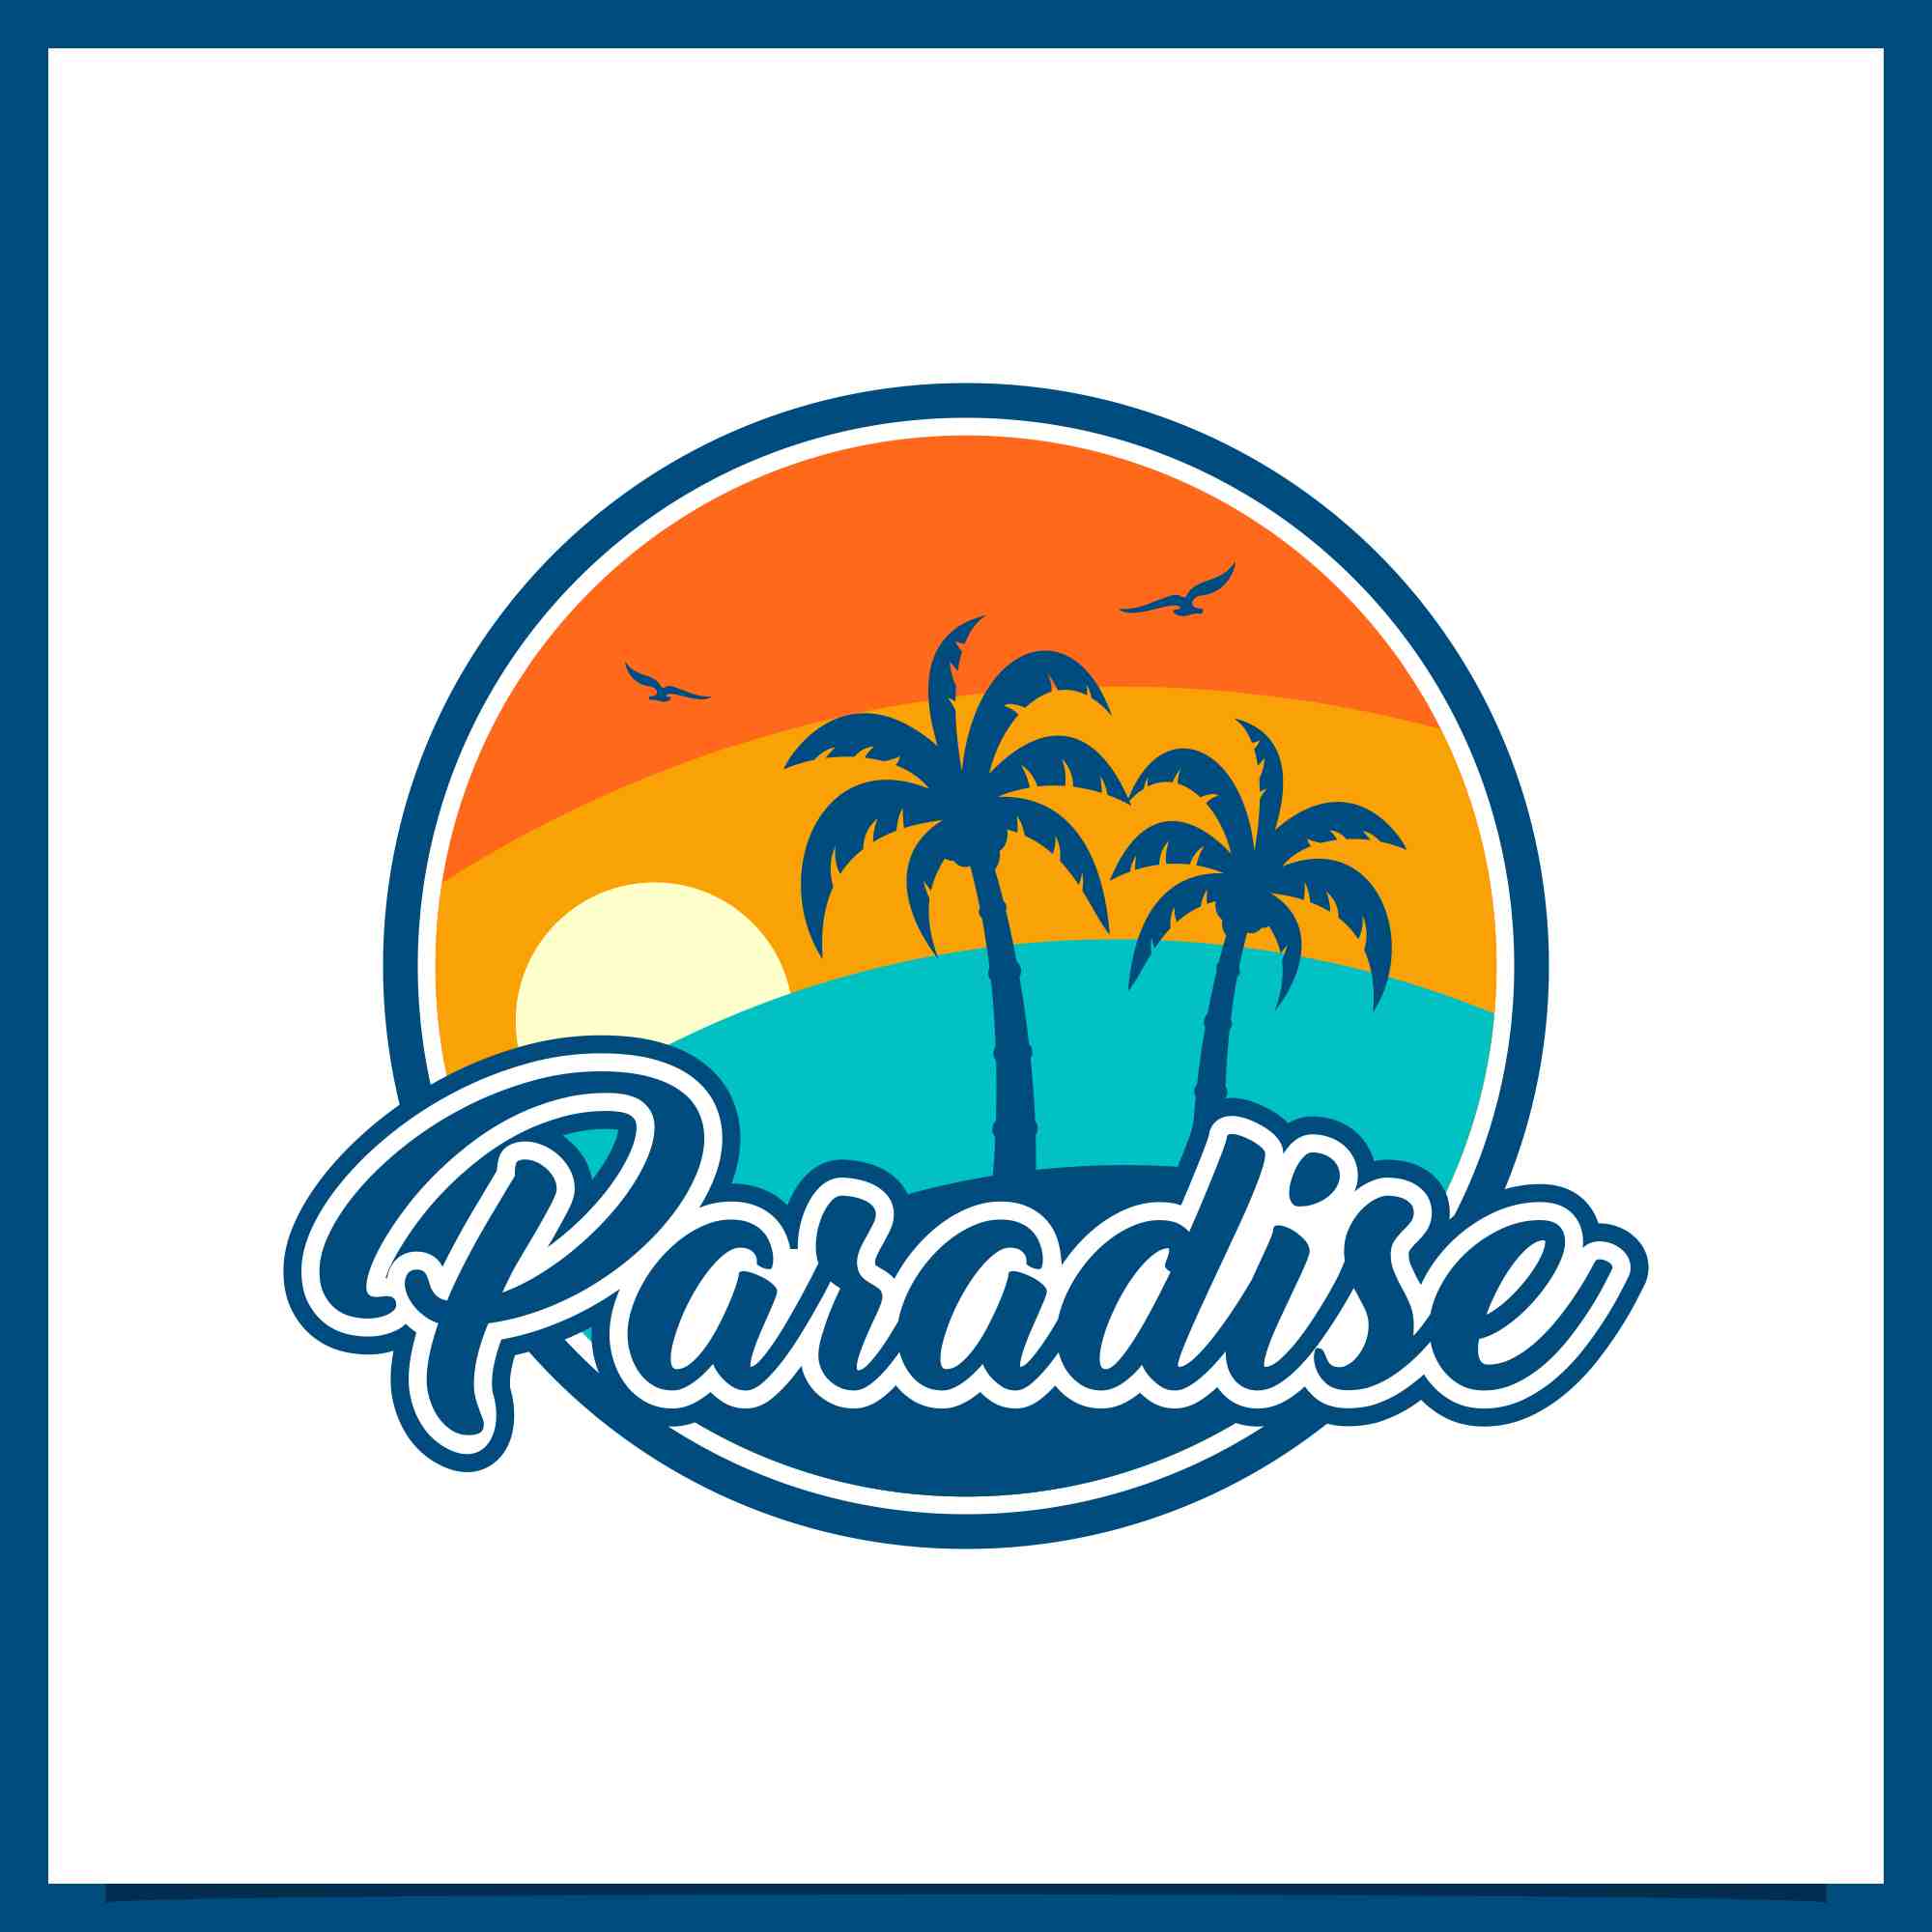 Set Paradise badge logo design collection - $4 preview image.